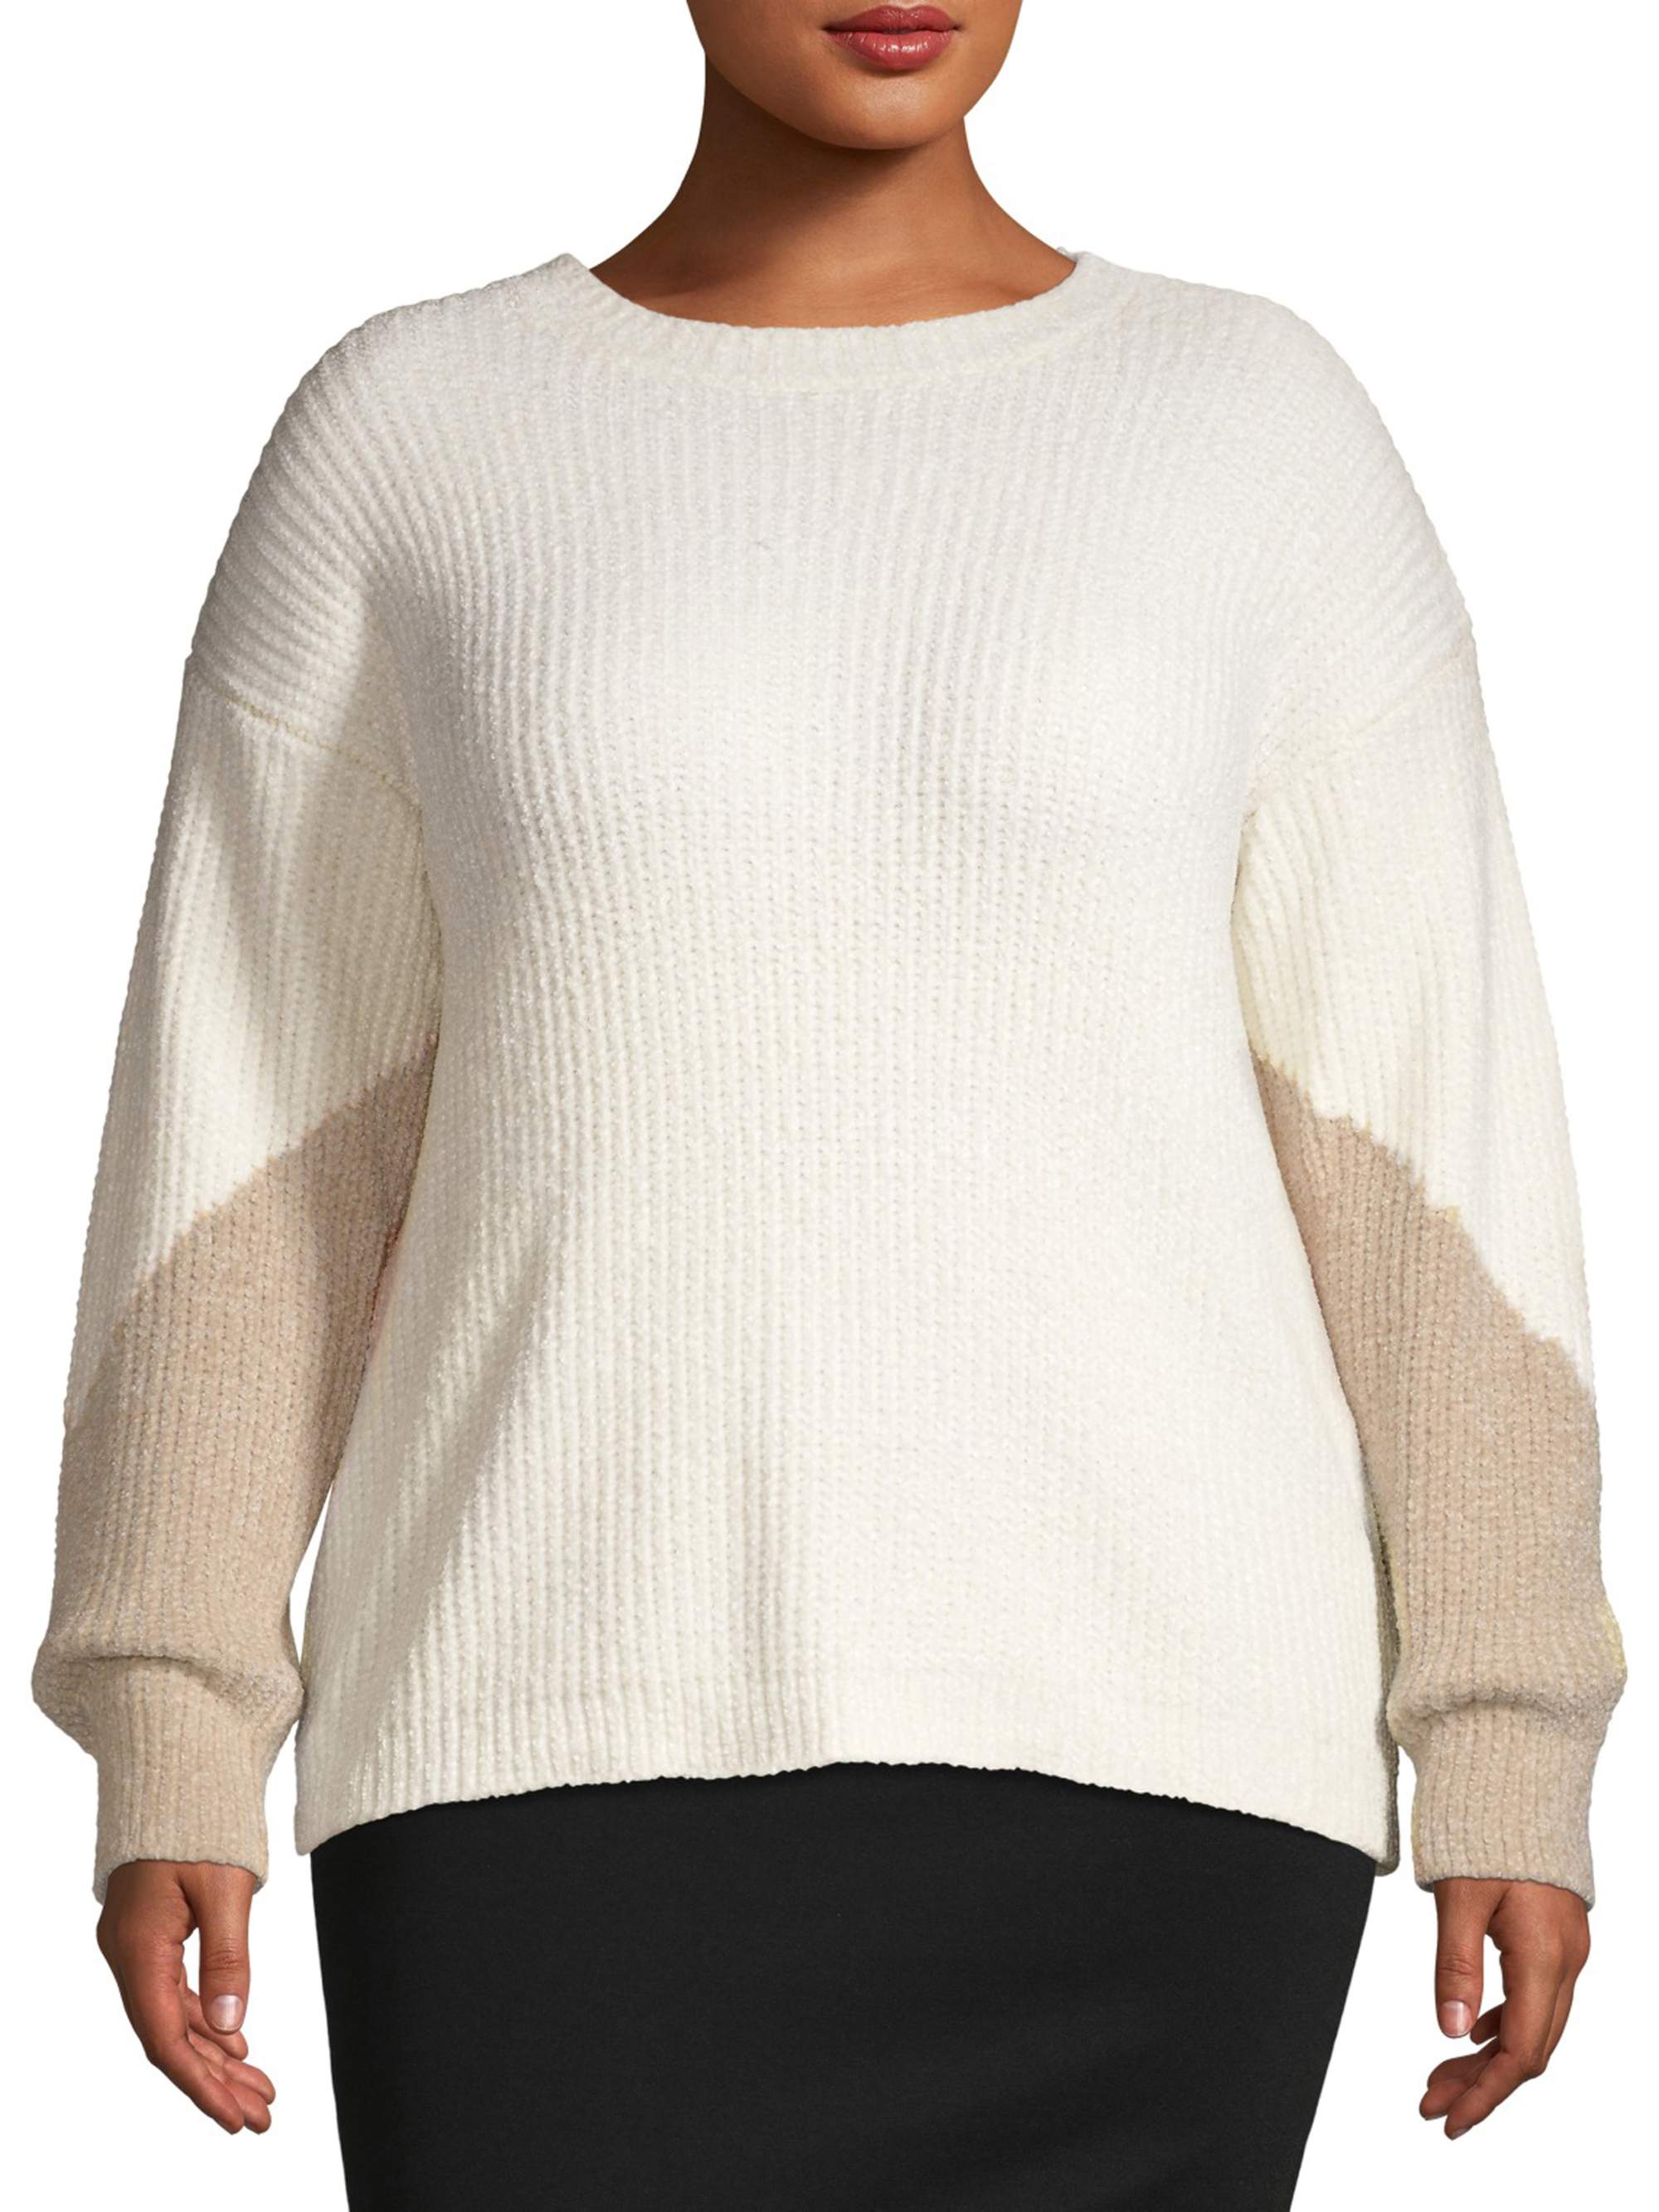 Heart & Crush Women's Plus Size Chenille Color Block Pullover - image 1 of 7